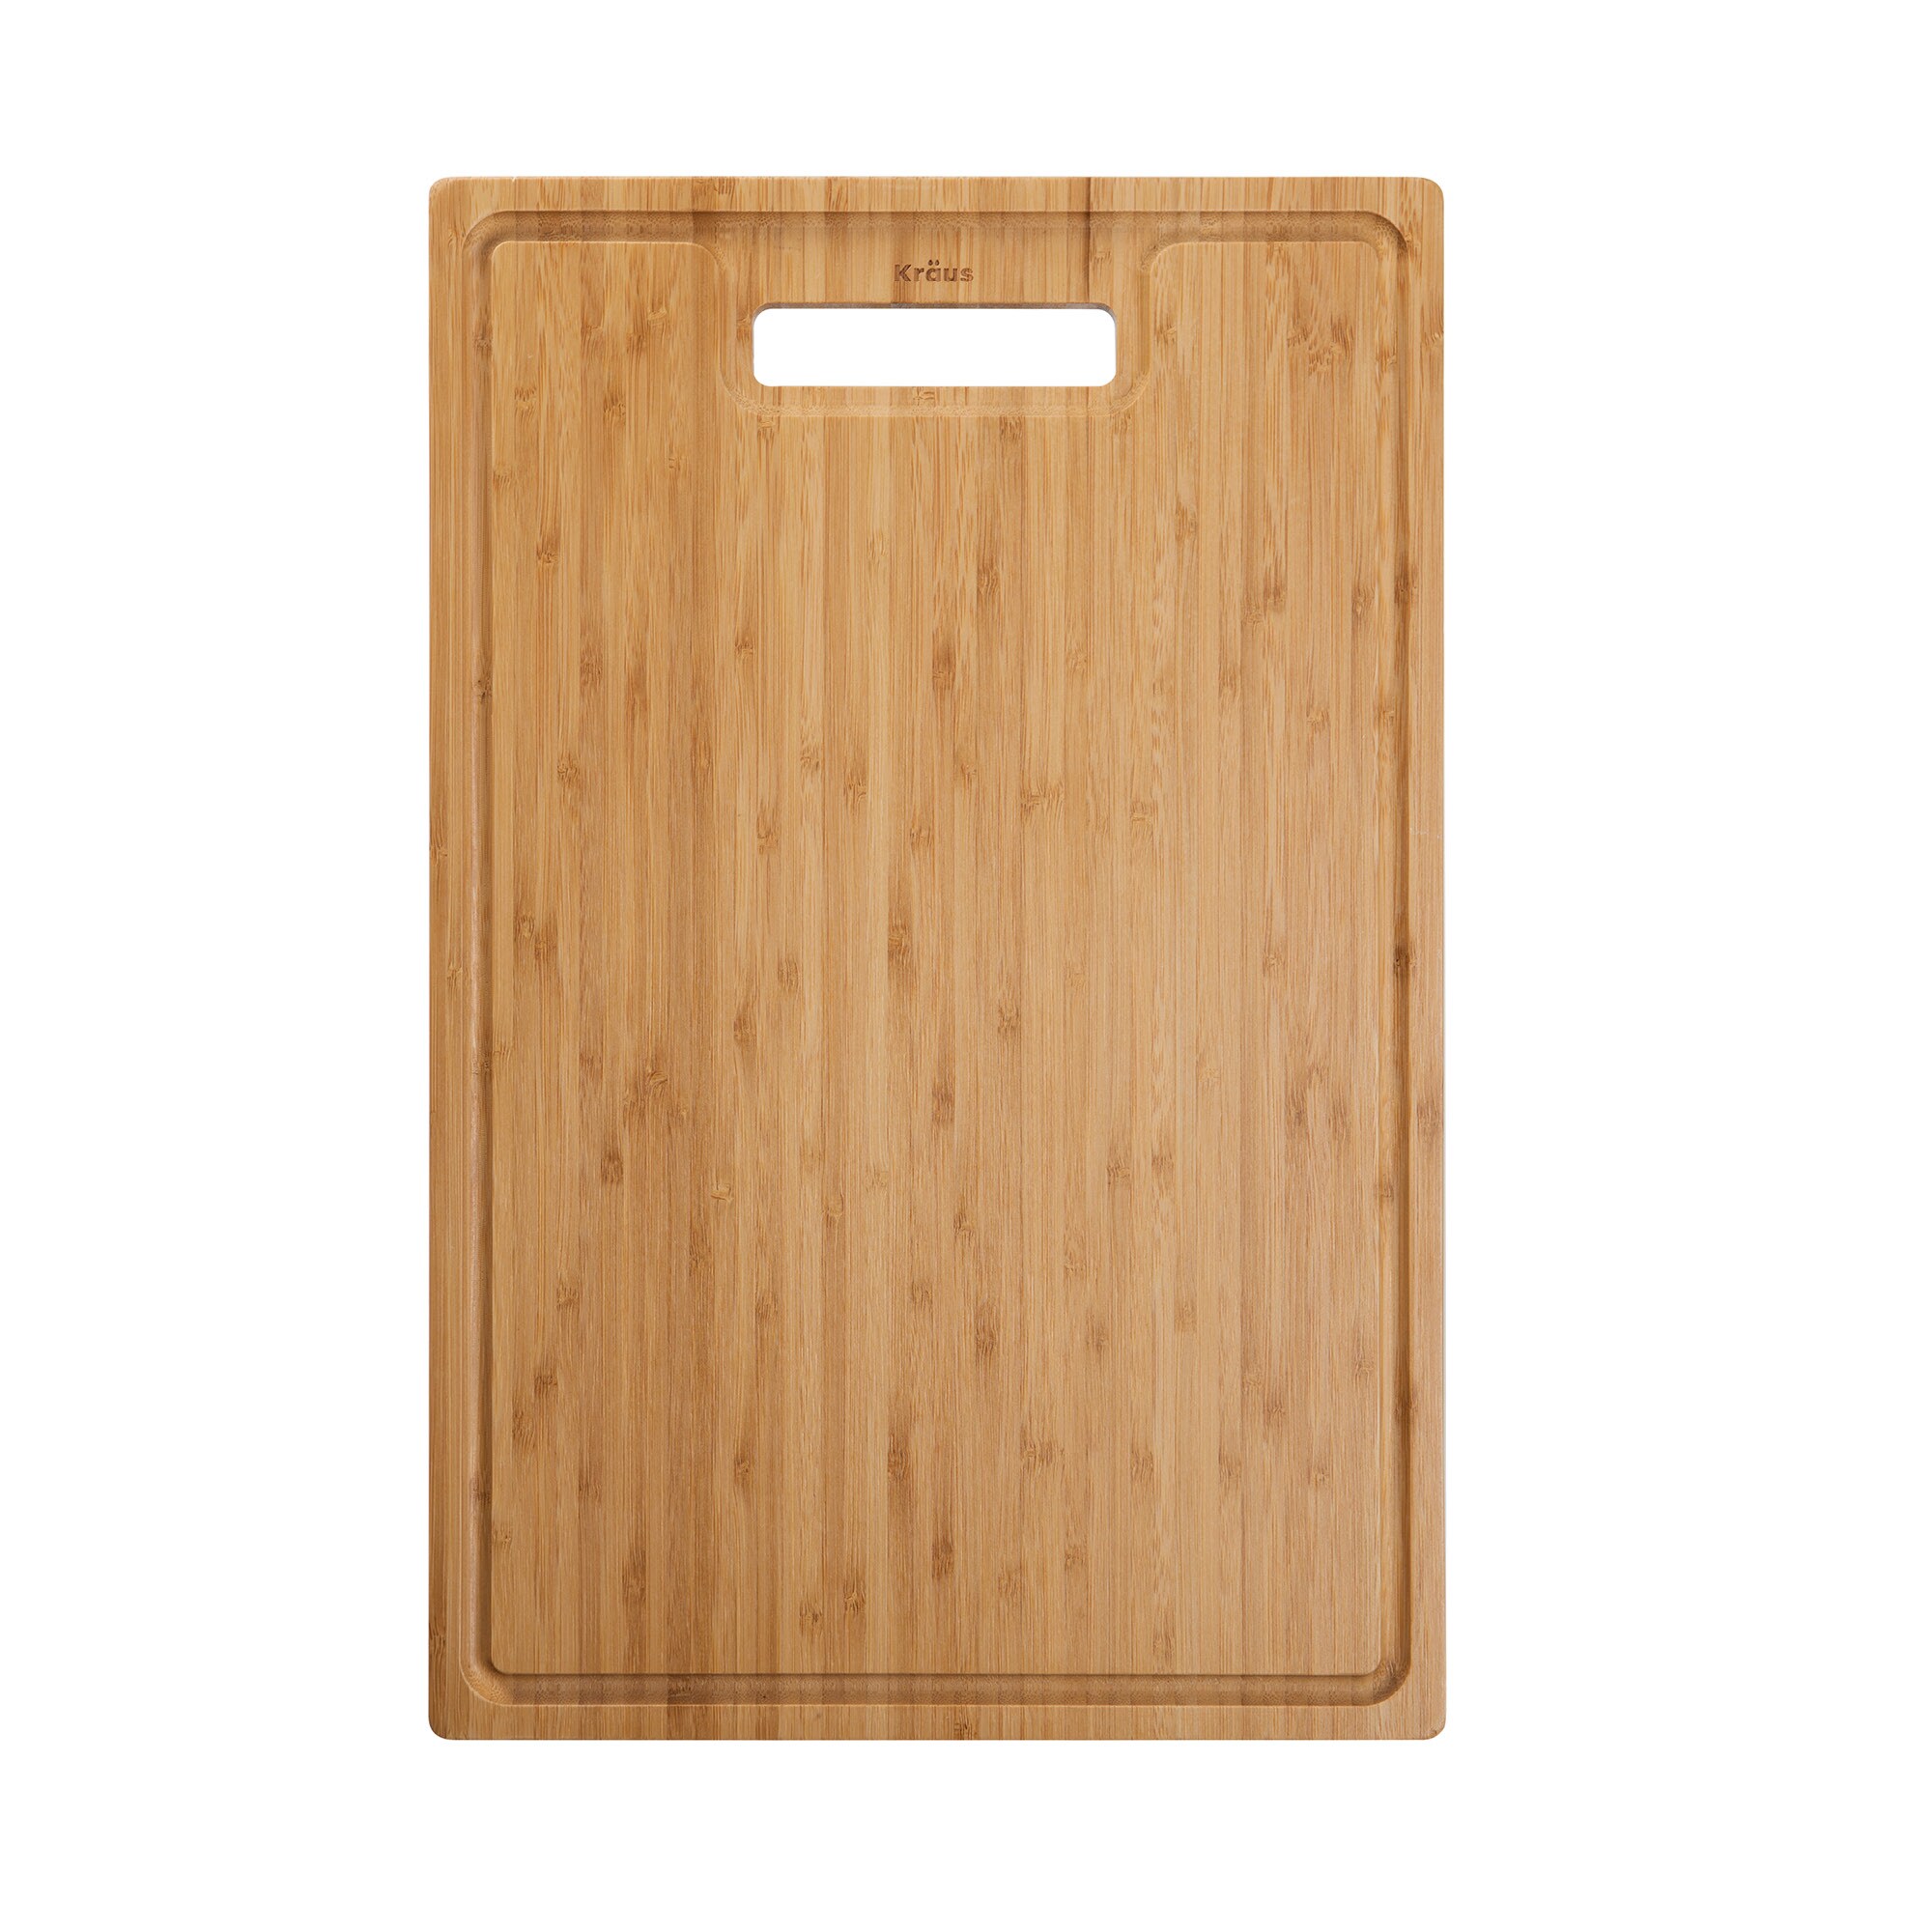 Kraus 18.5-in L x 12-in W Wood Cutting Board in the Cutting Boards